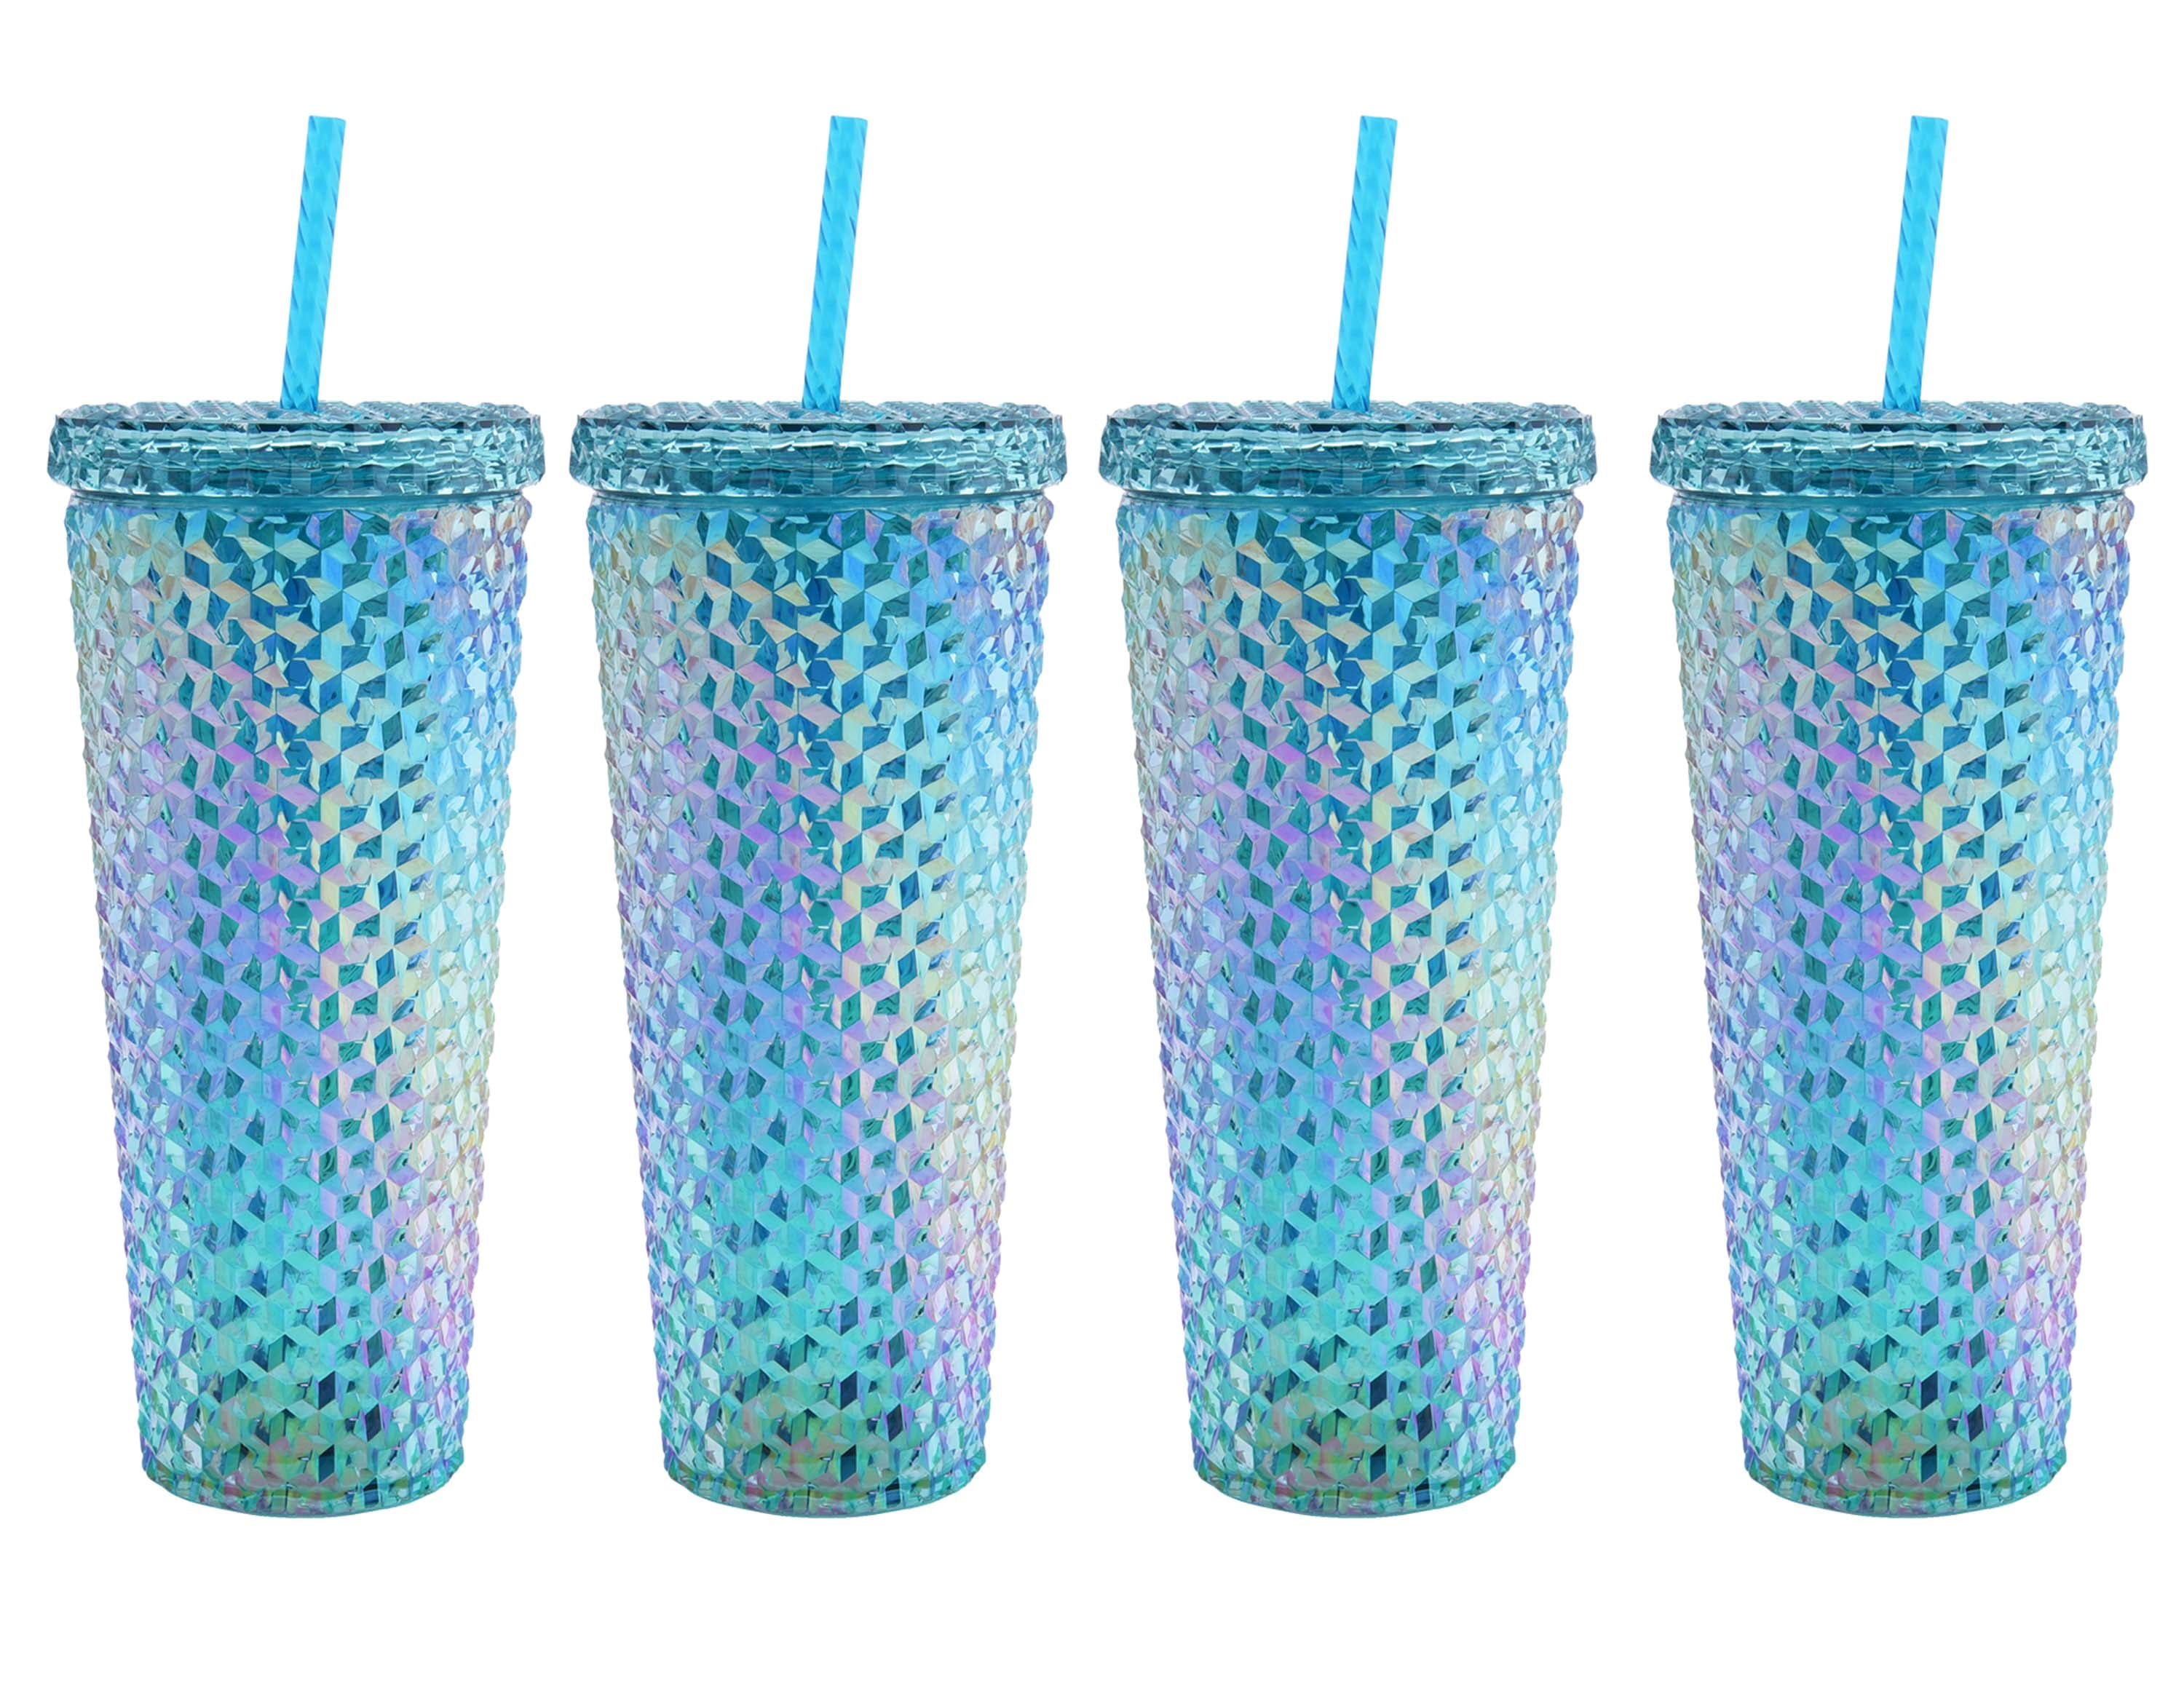 slm tumbler cups blue｜TikTok Search